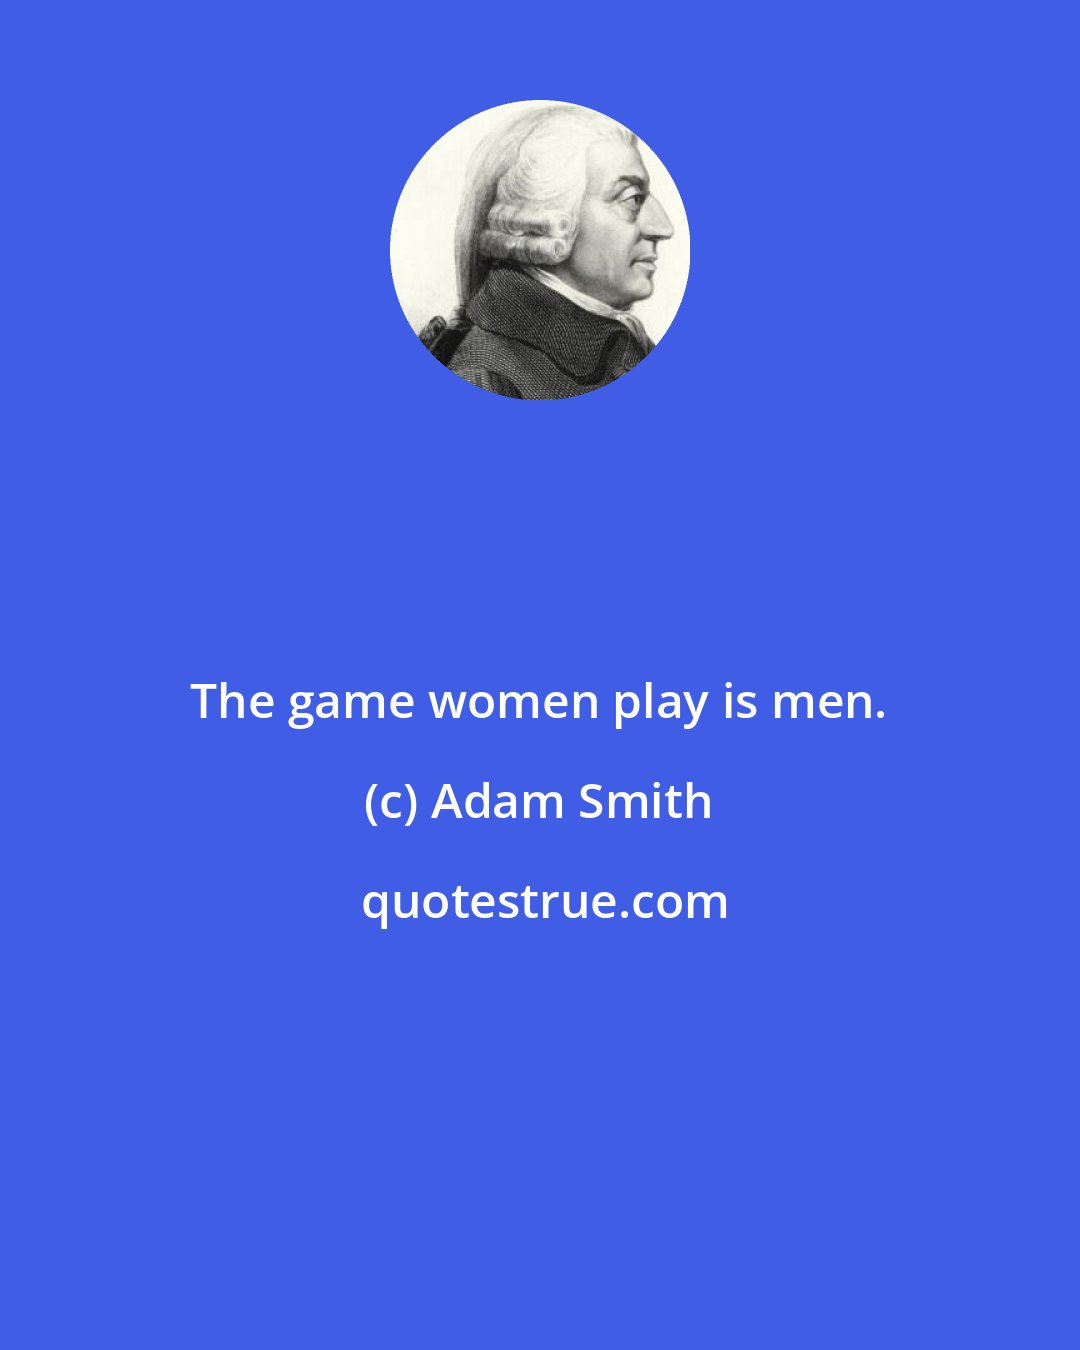 Adam Smith: The game women play is men.